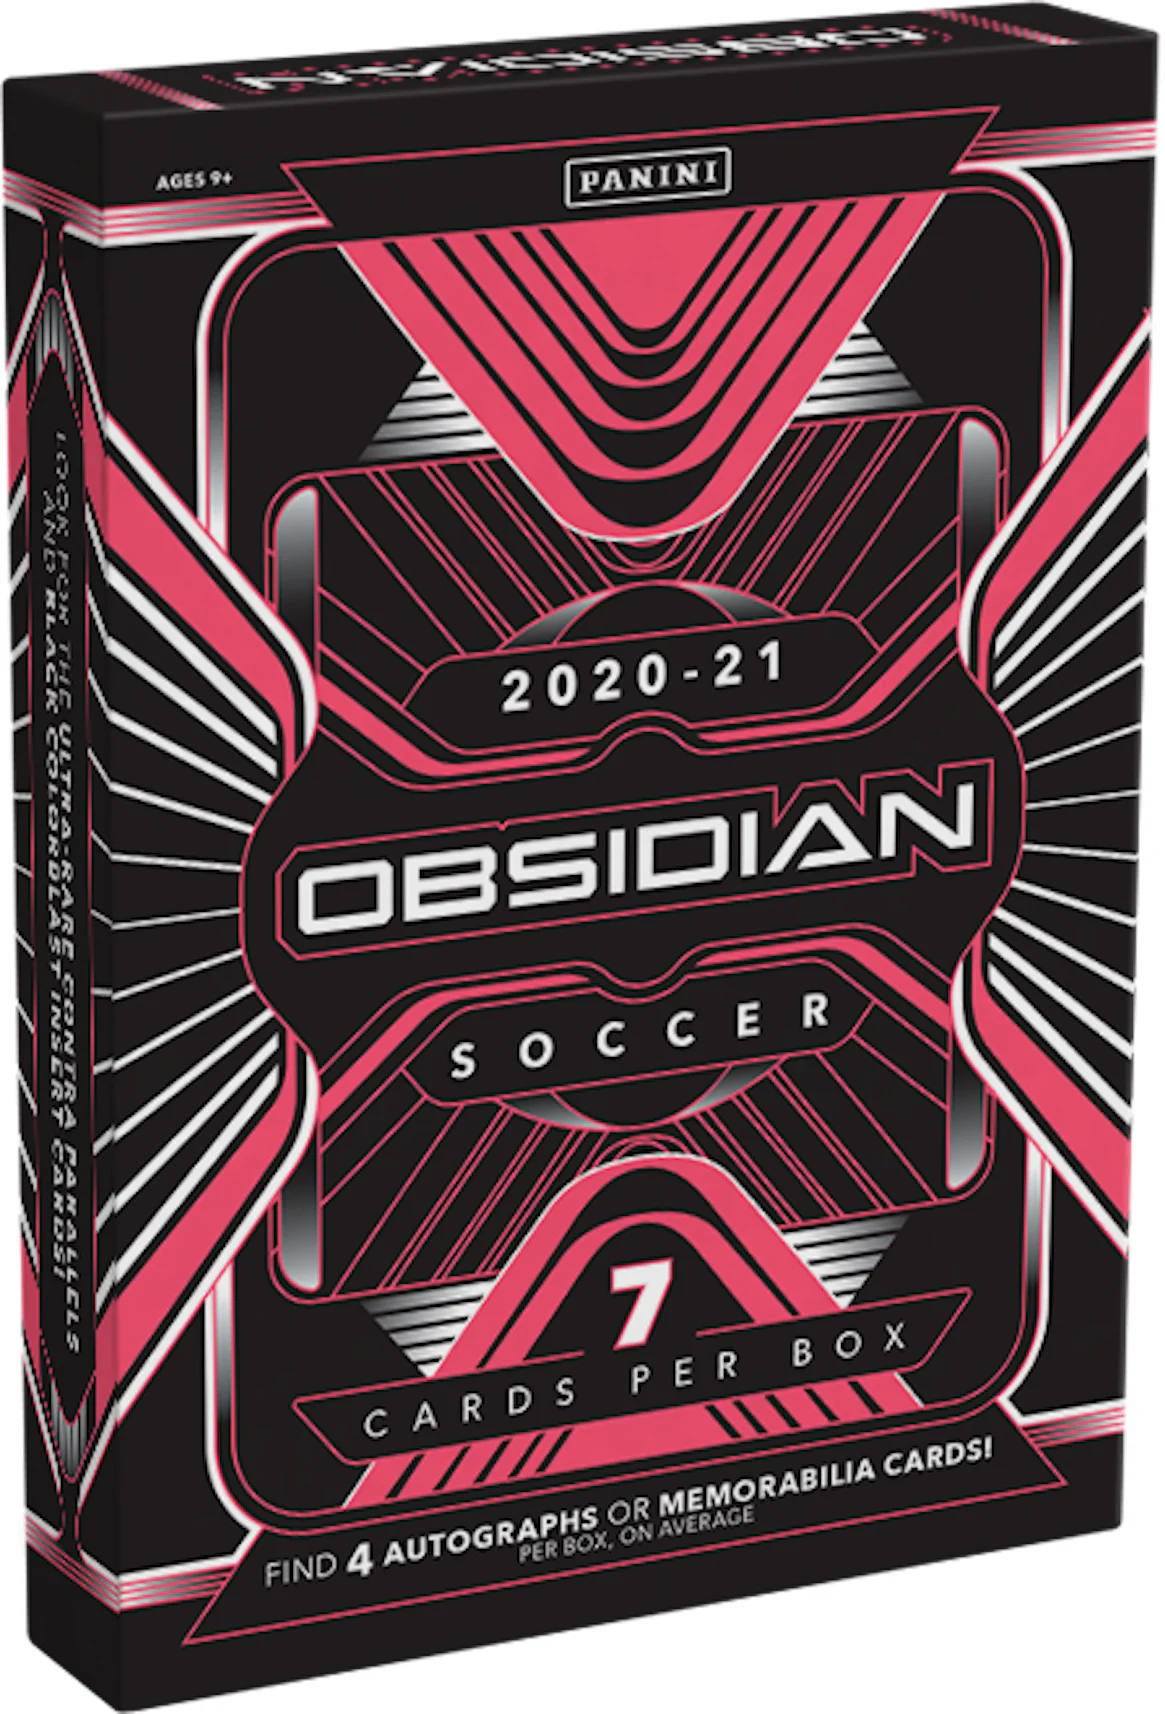 2020-21 Panini Obsidian Soccer Hobby Box - 2020-21 - JP